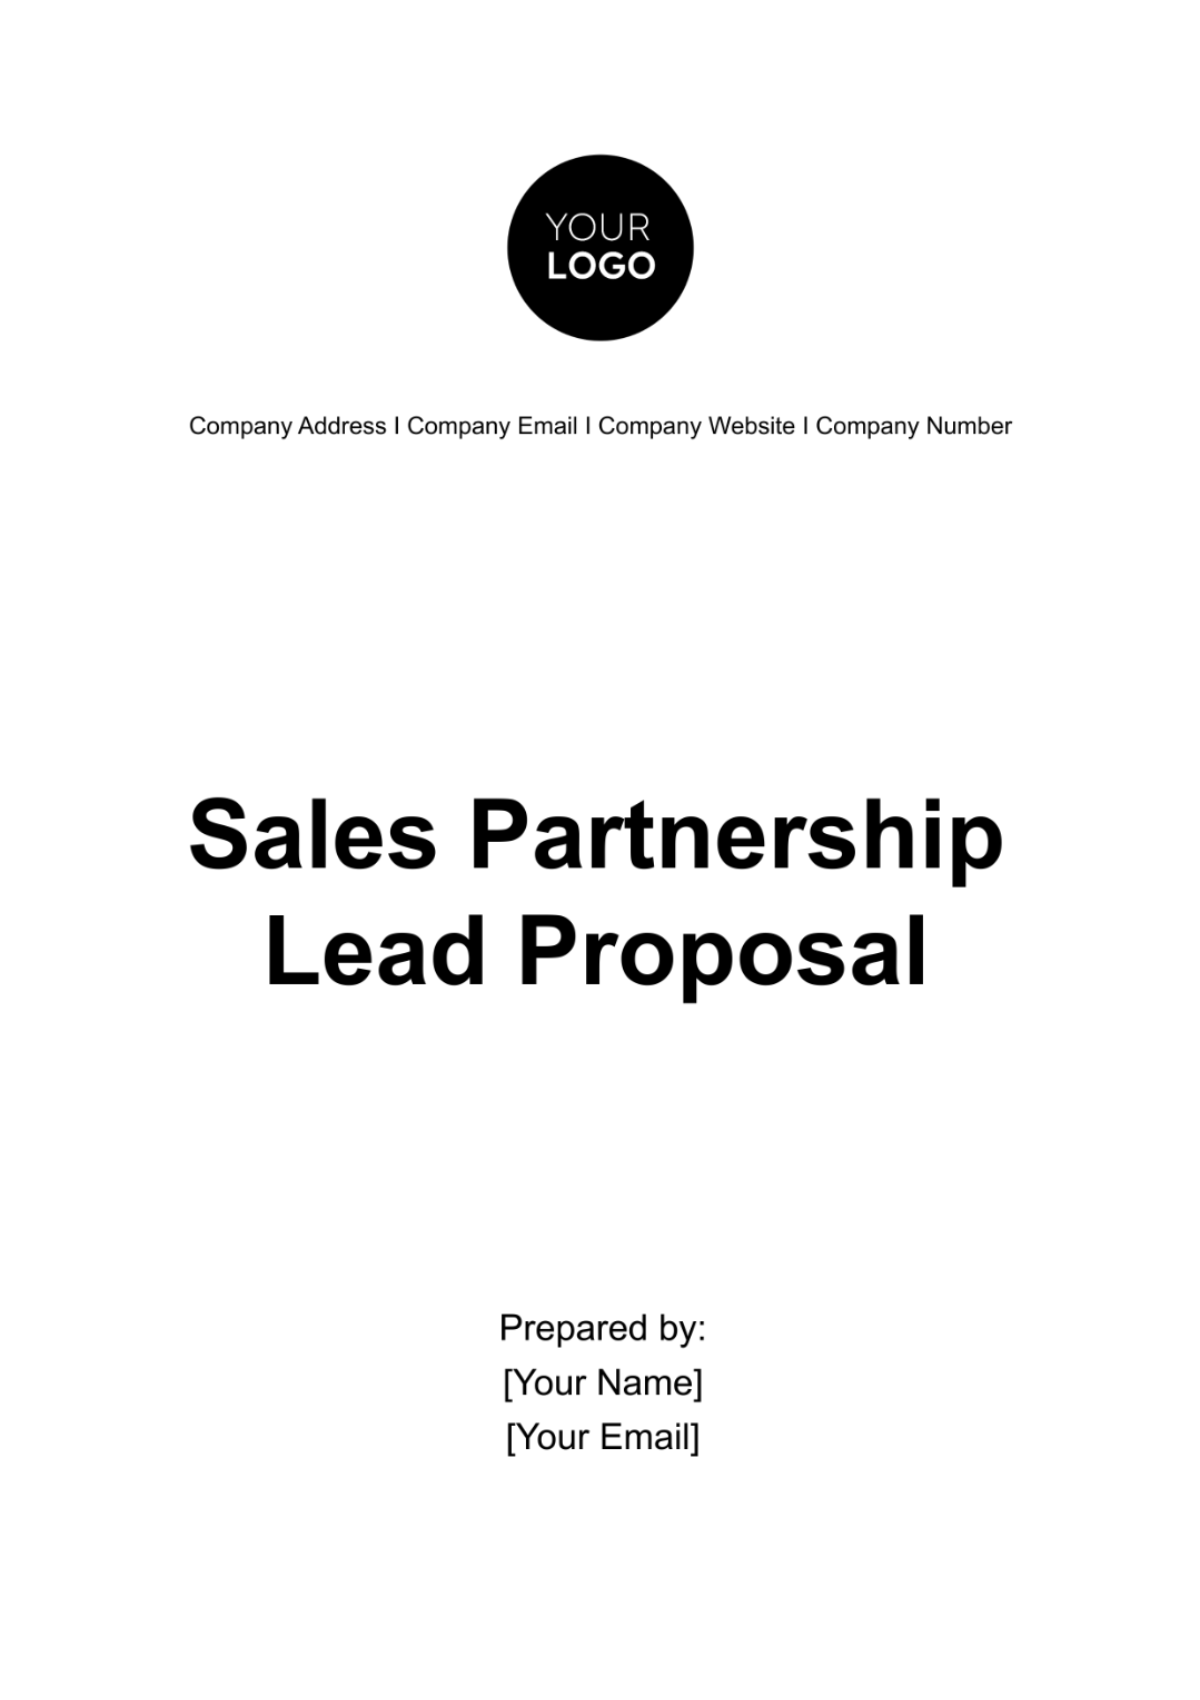 Sales Partnership Lead Proposal Template